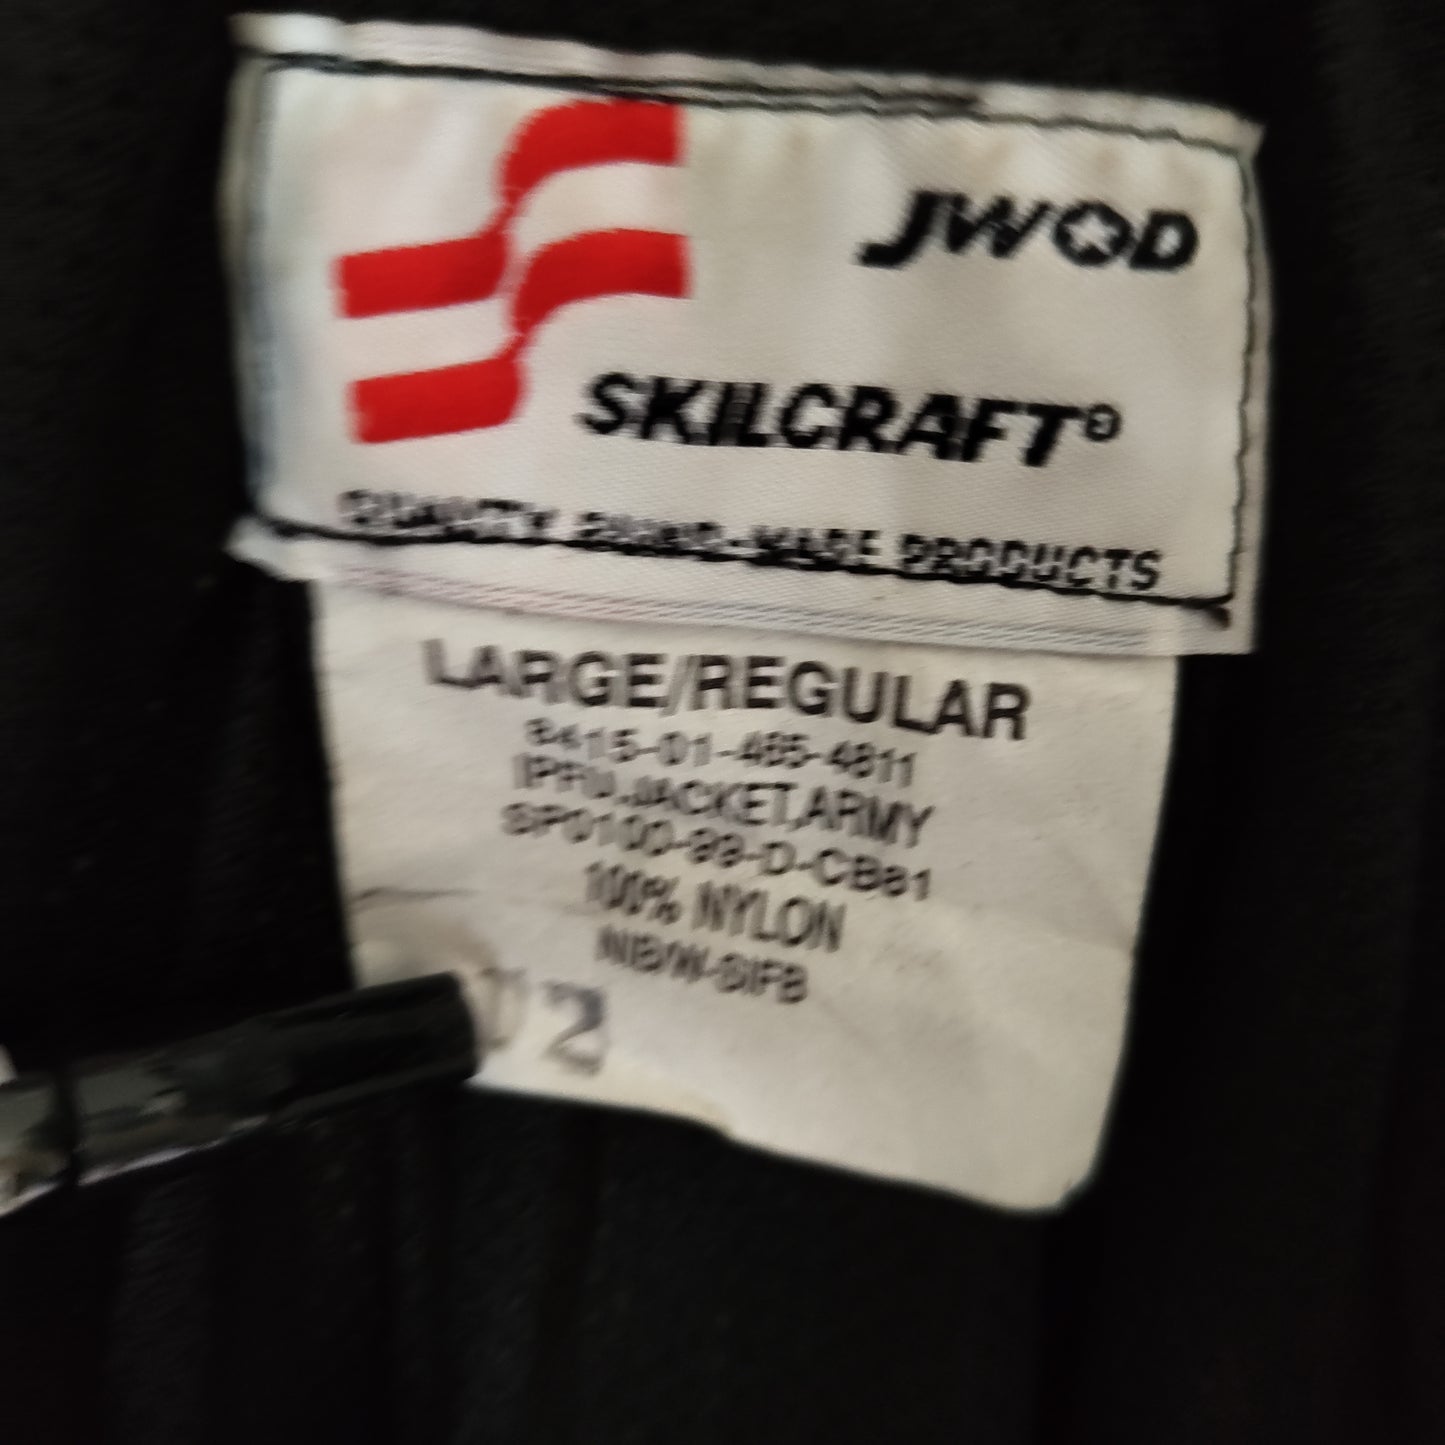 [U.S.Army] 90's traning jacket